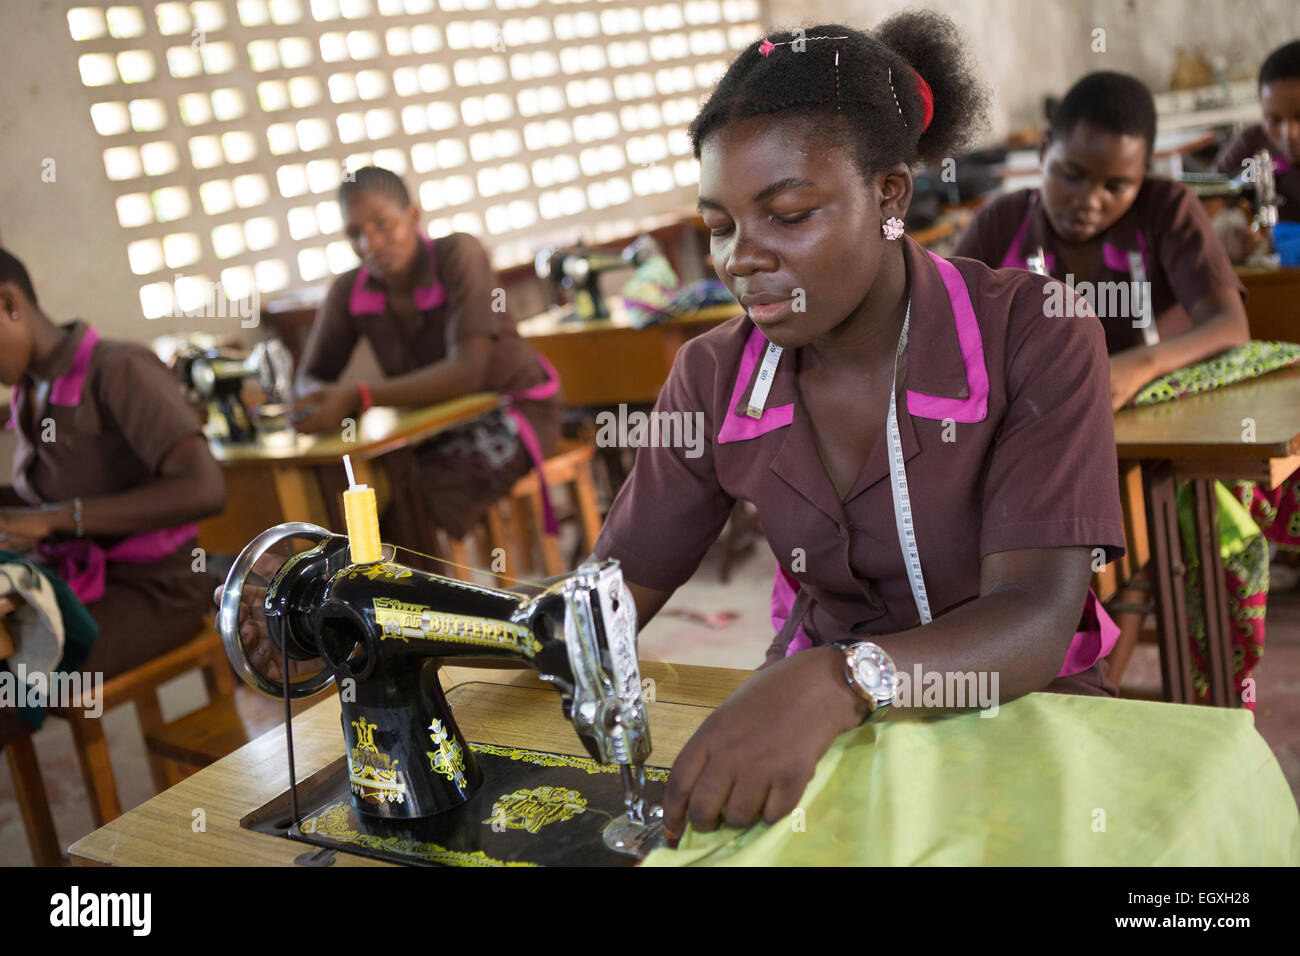 Sewing and vocational training class - Dar es Salaam, Tanzania Stock Photo